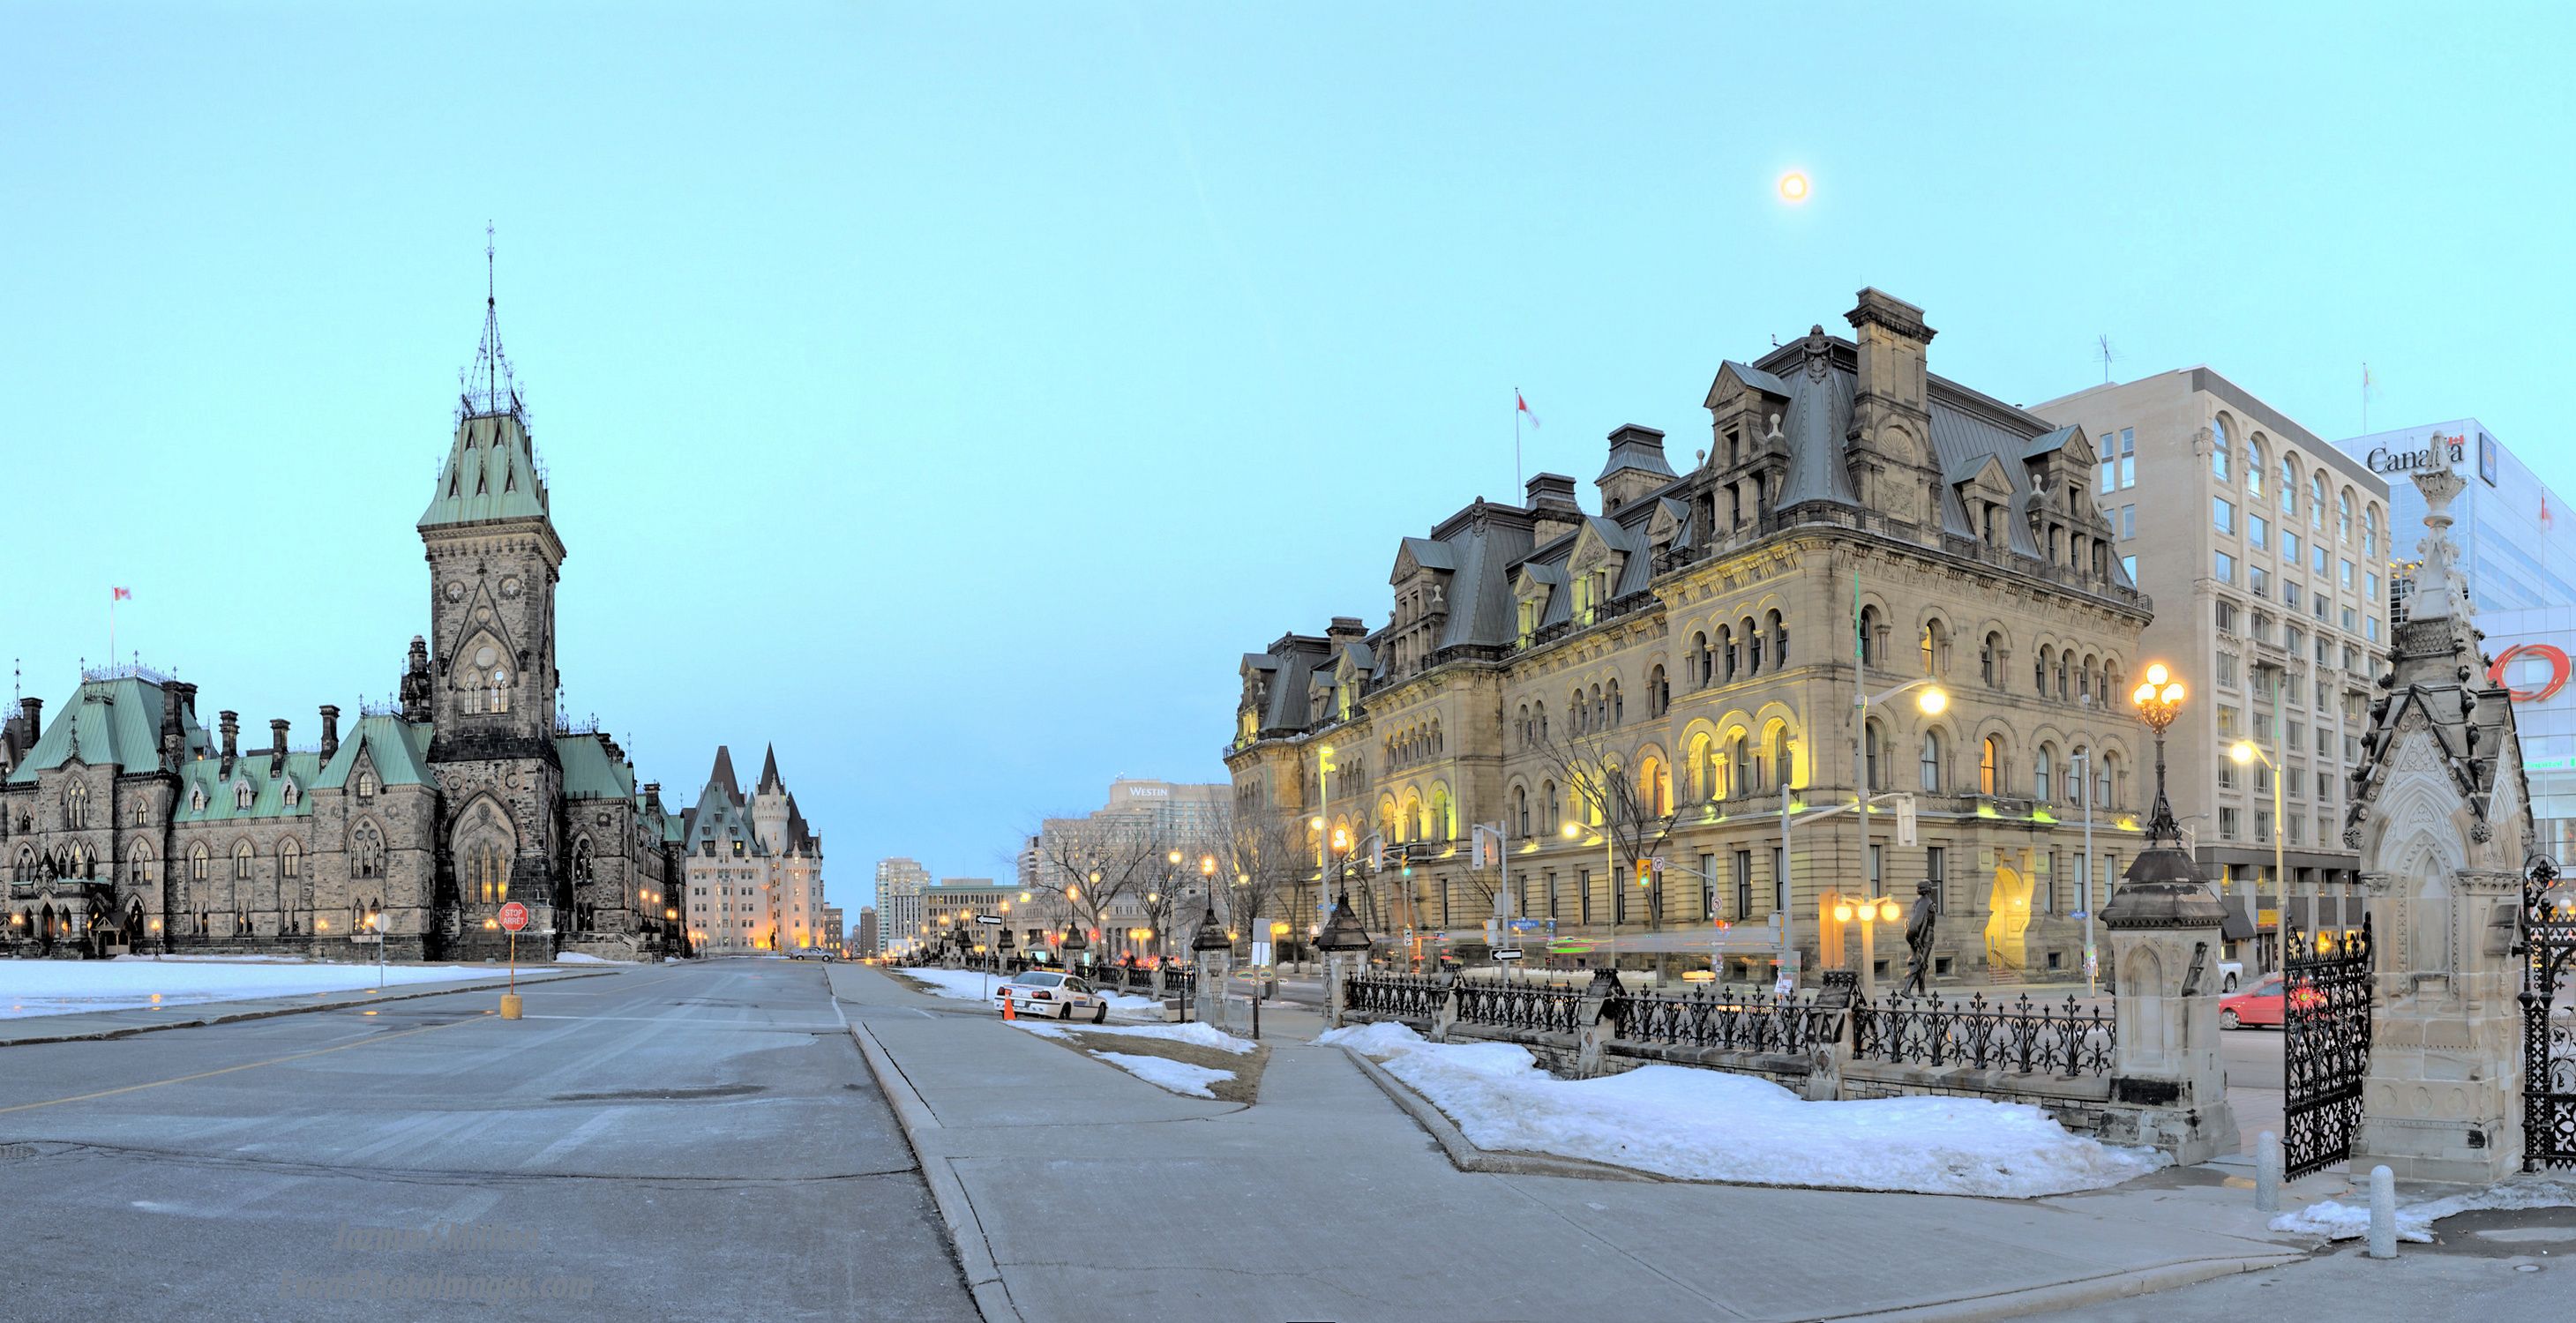 Время сейчас красивое. Оттава столица Канады. Оттава Онтарио Канада. Парламентский холм Оттава. Оттава-Карлтон улицы.